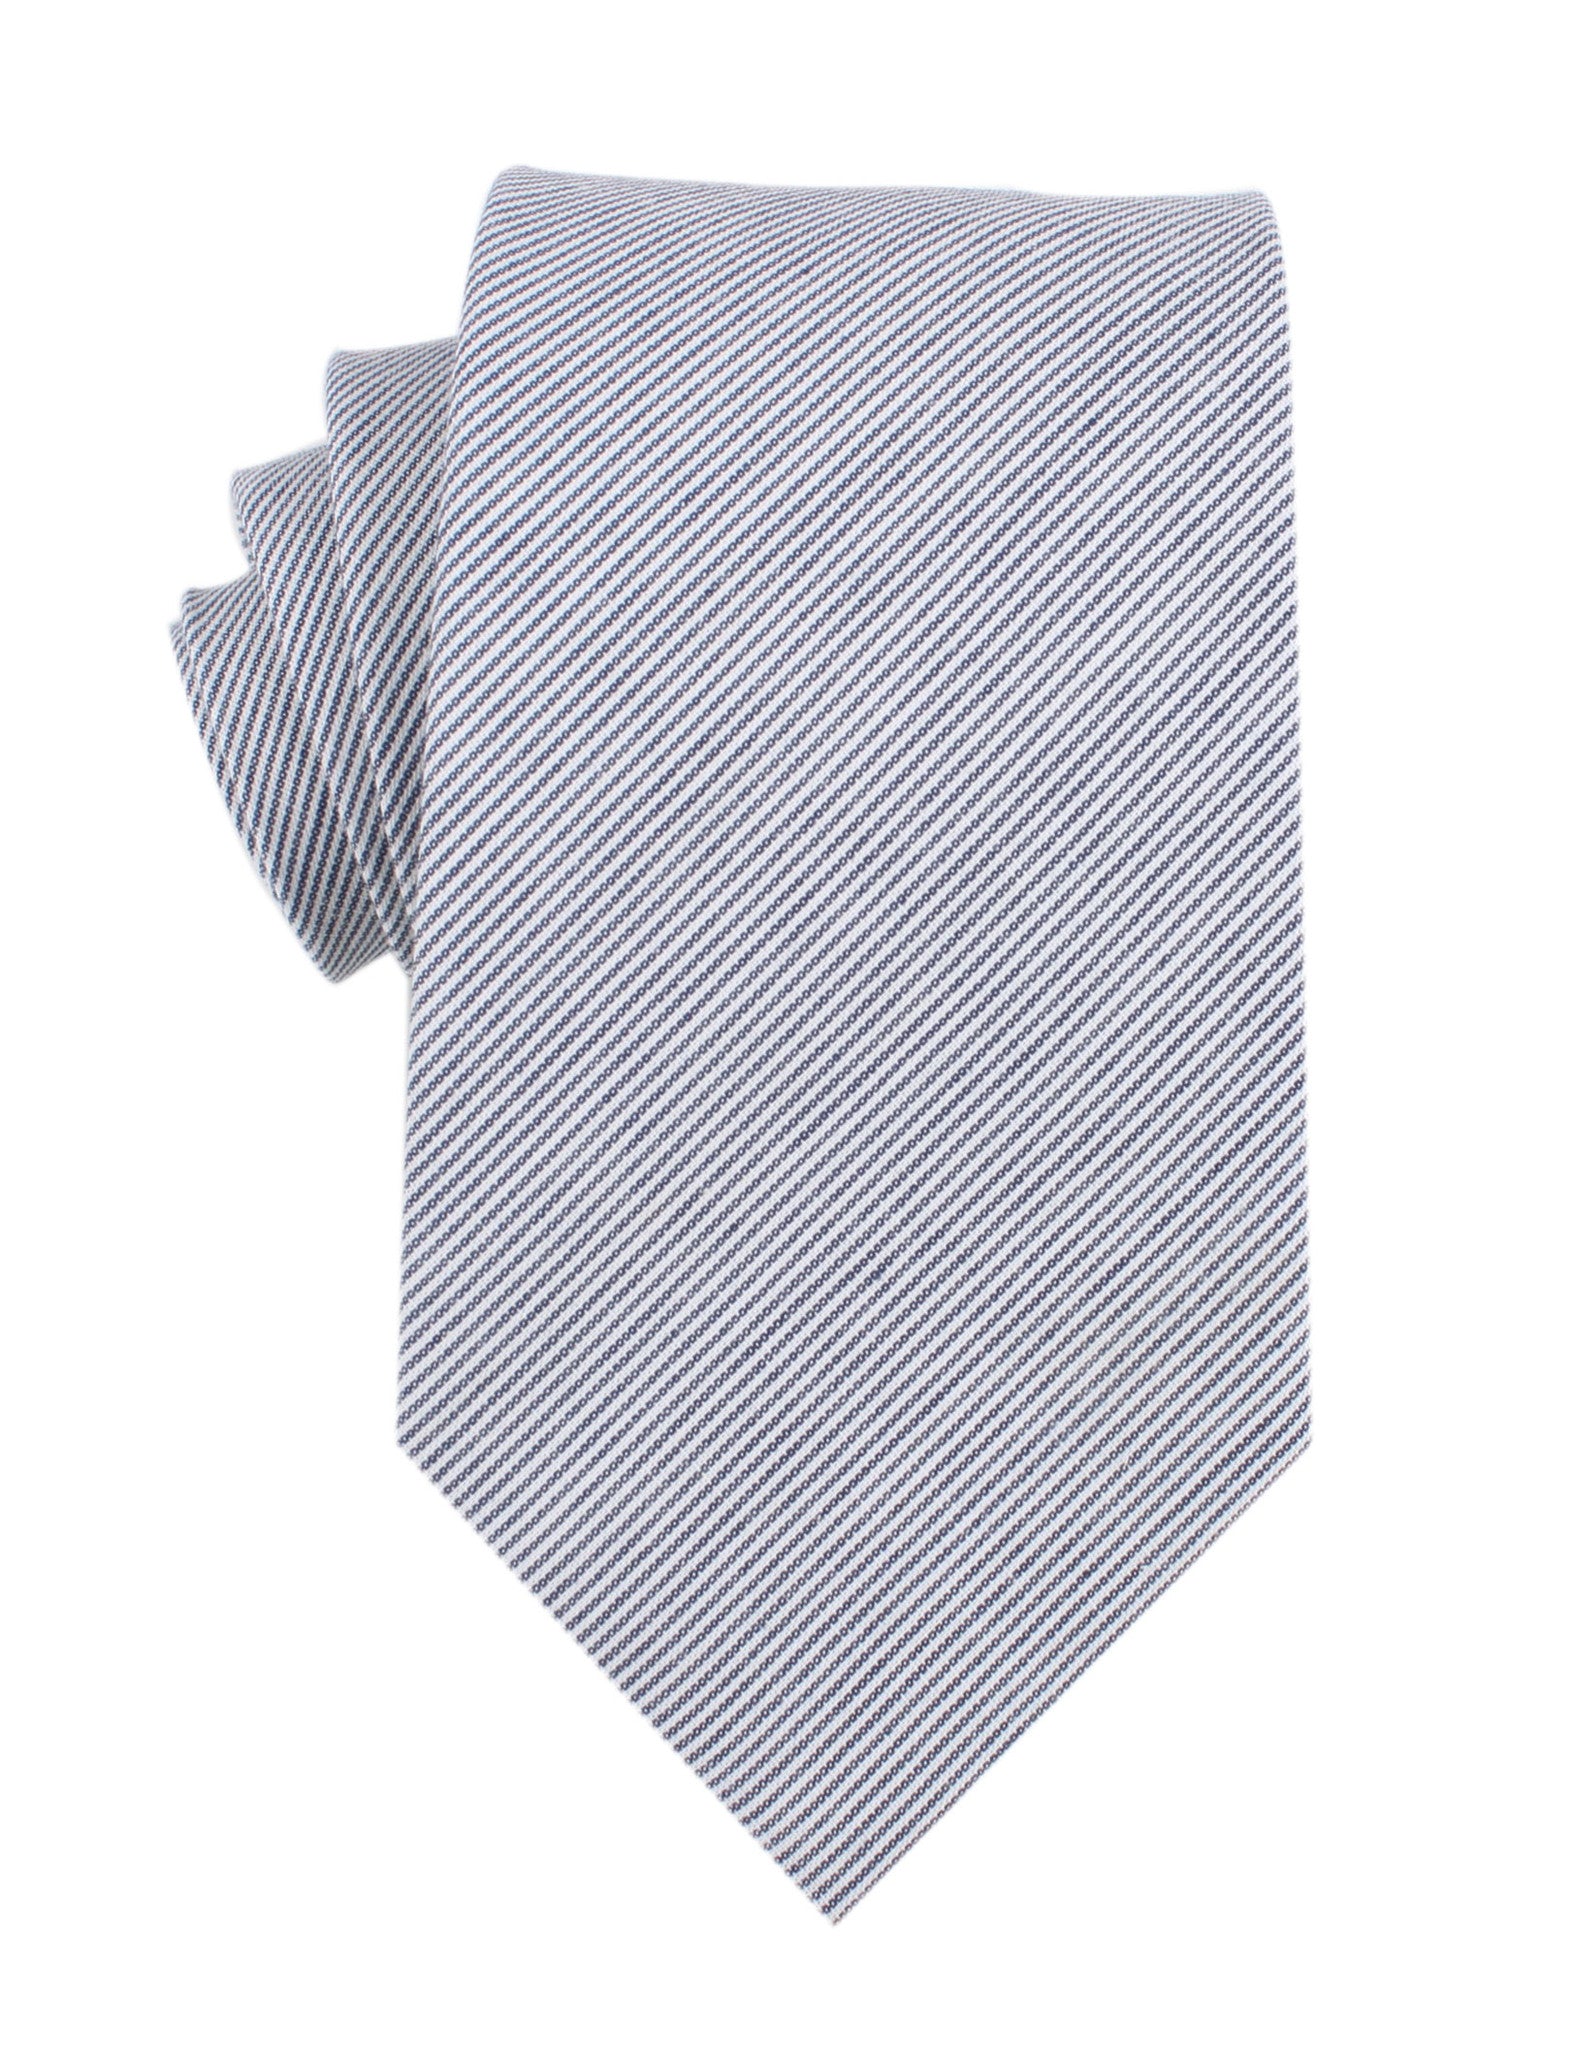 Black and White Pinstripe Cotton Necktie